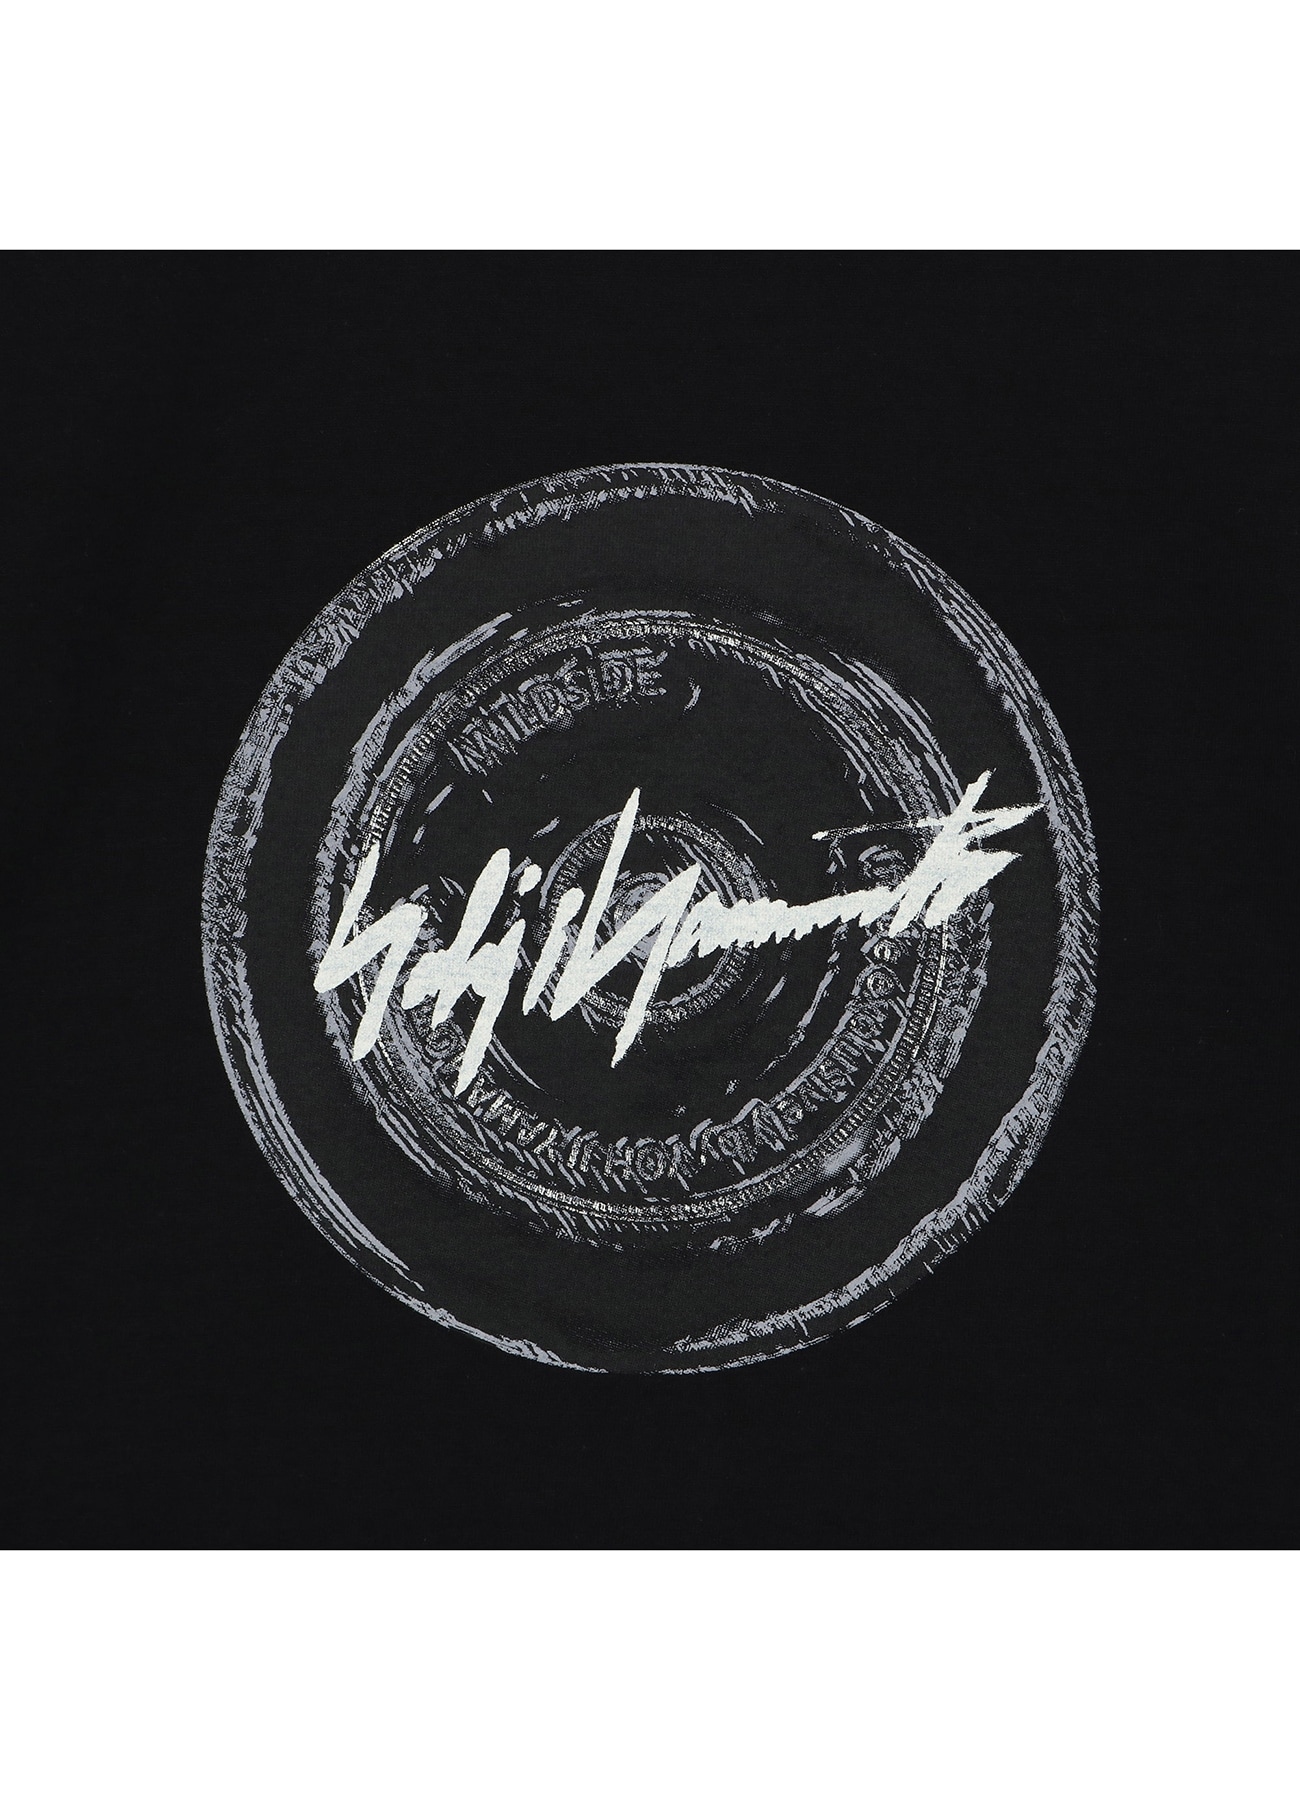 WILDSIDE Record T-shirt(M BLACK): YOHJI YAMAMOTO｜WILDSIDE YOHJI